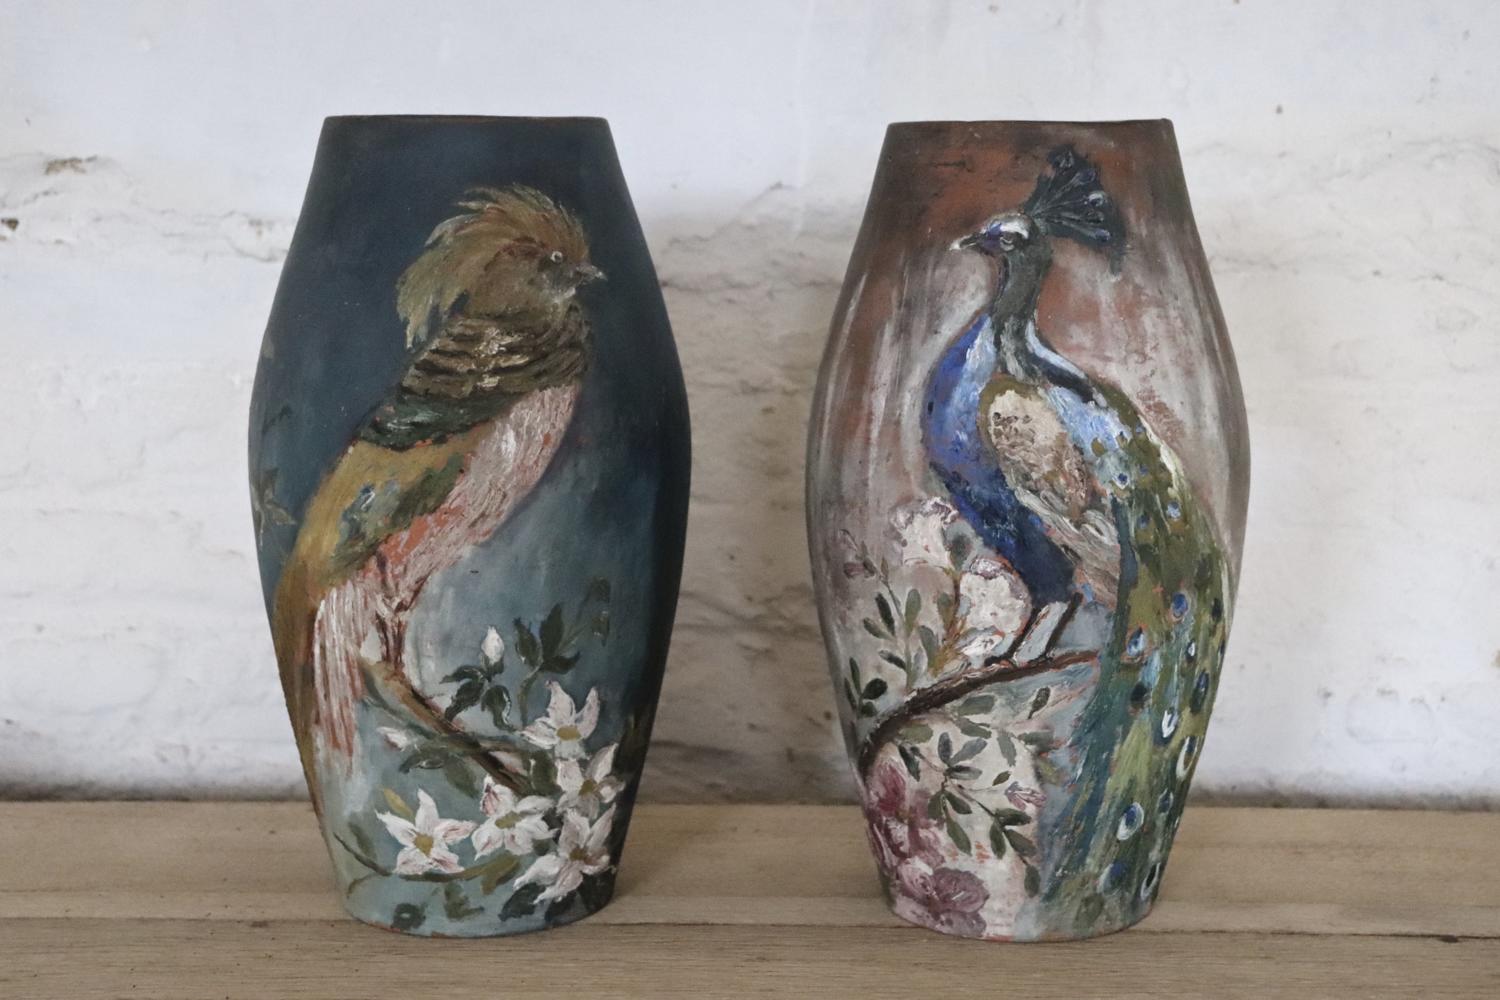 Pair of terracotta vases with birds